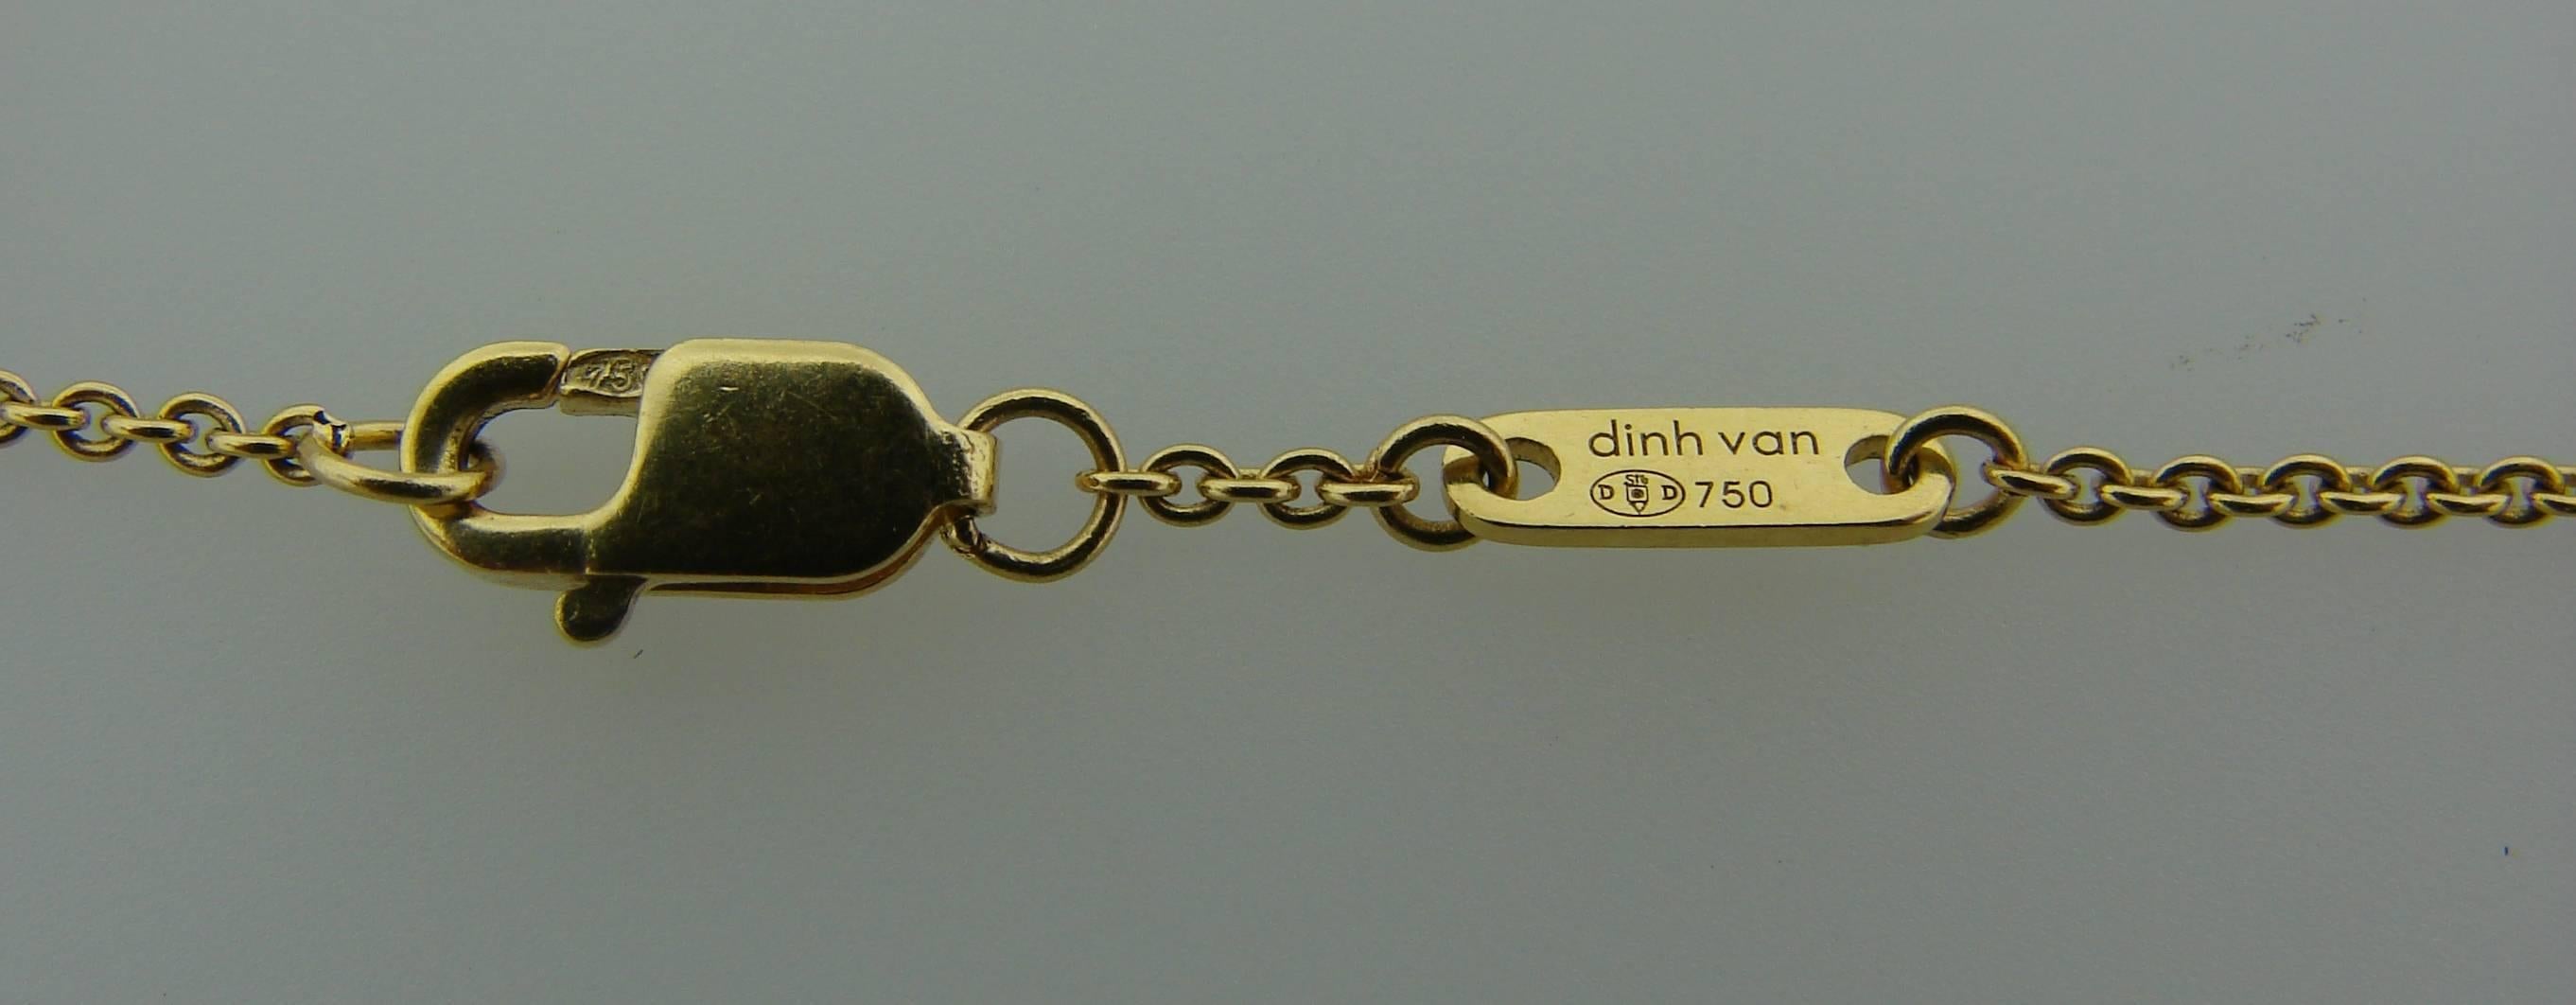 Dinh Van 24 karat Gold Pendant Necklace 2